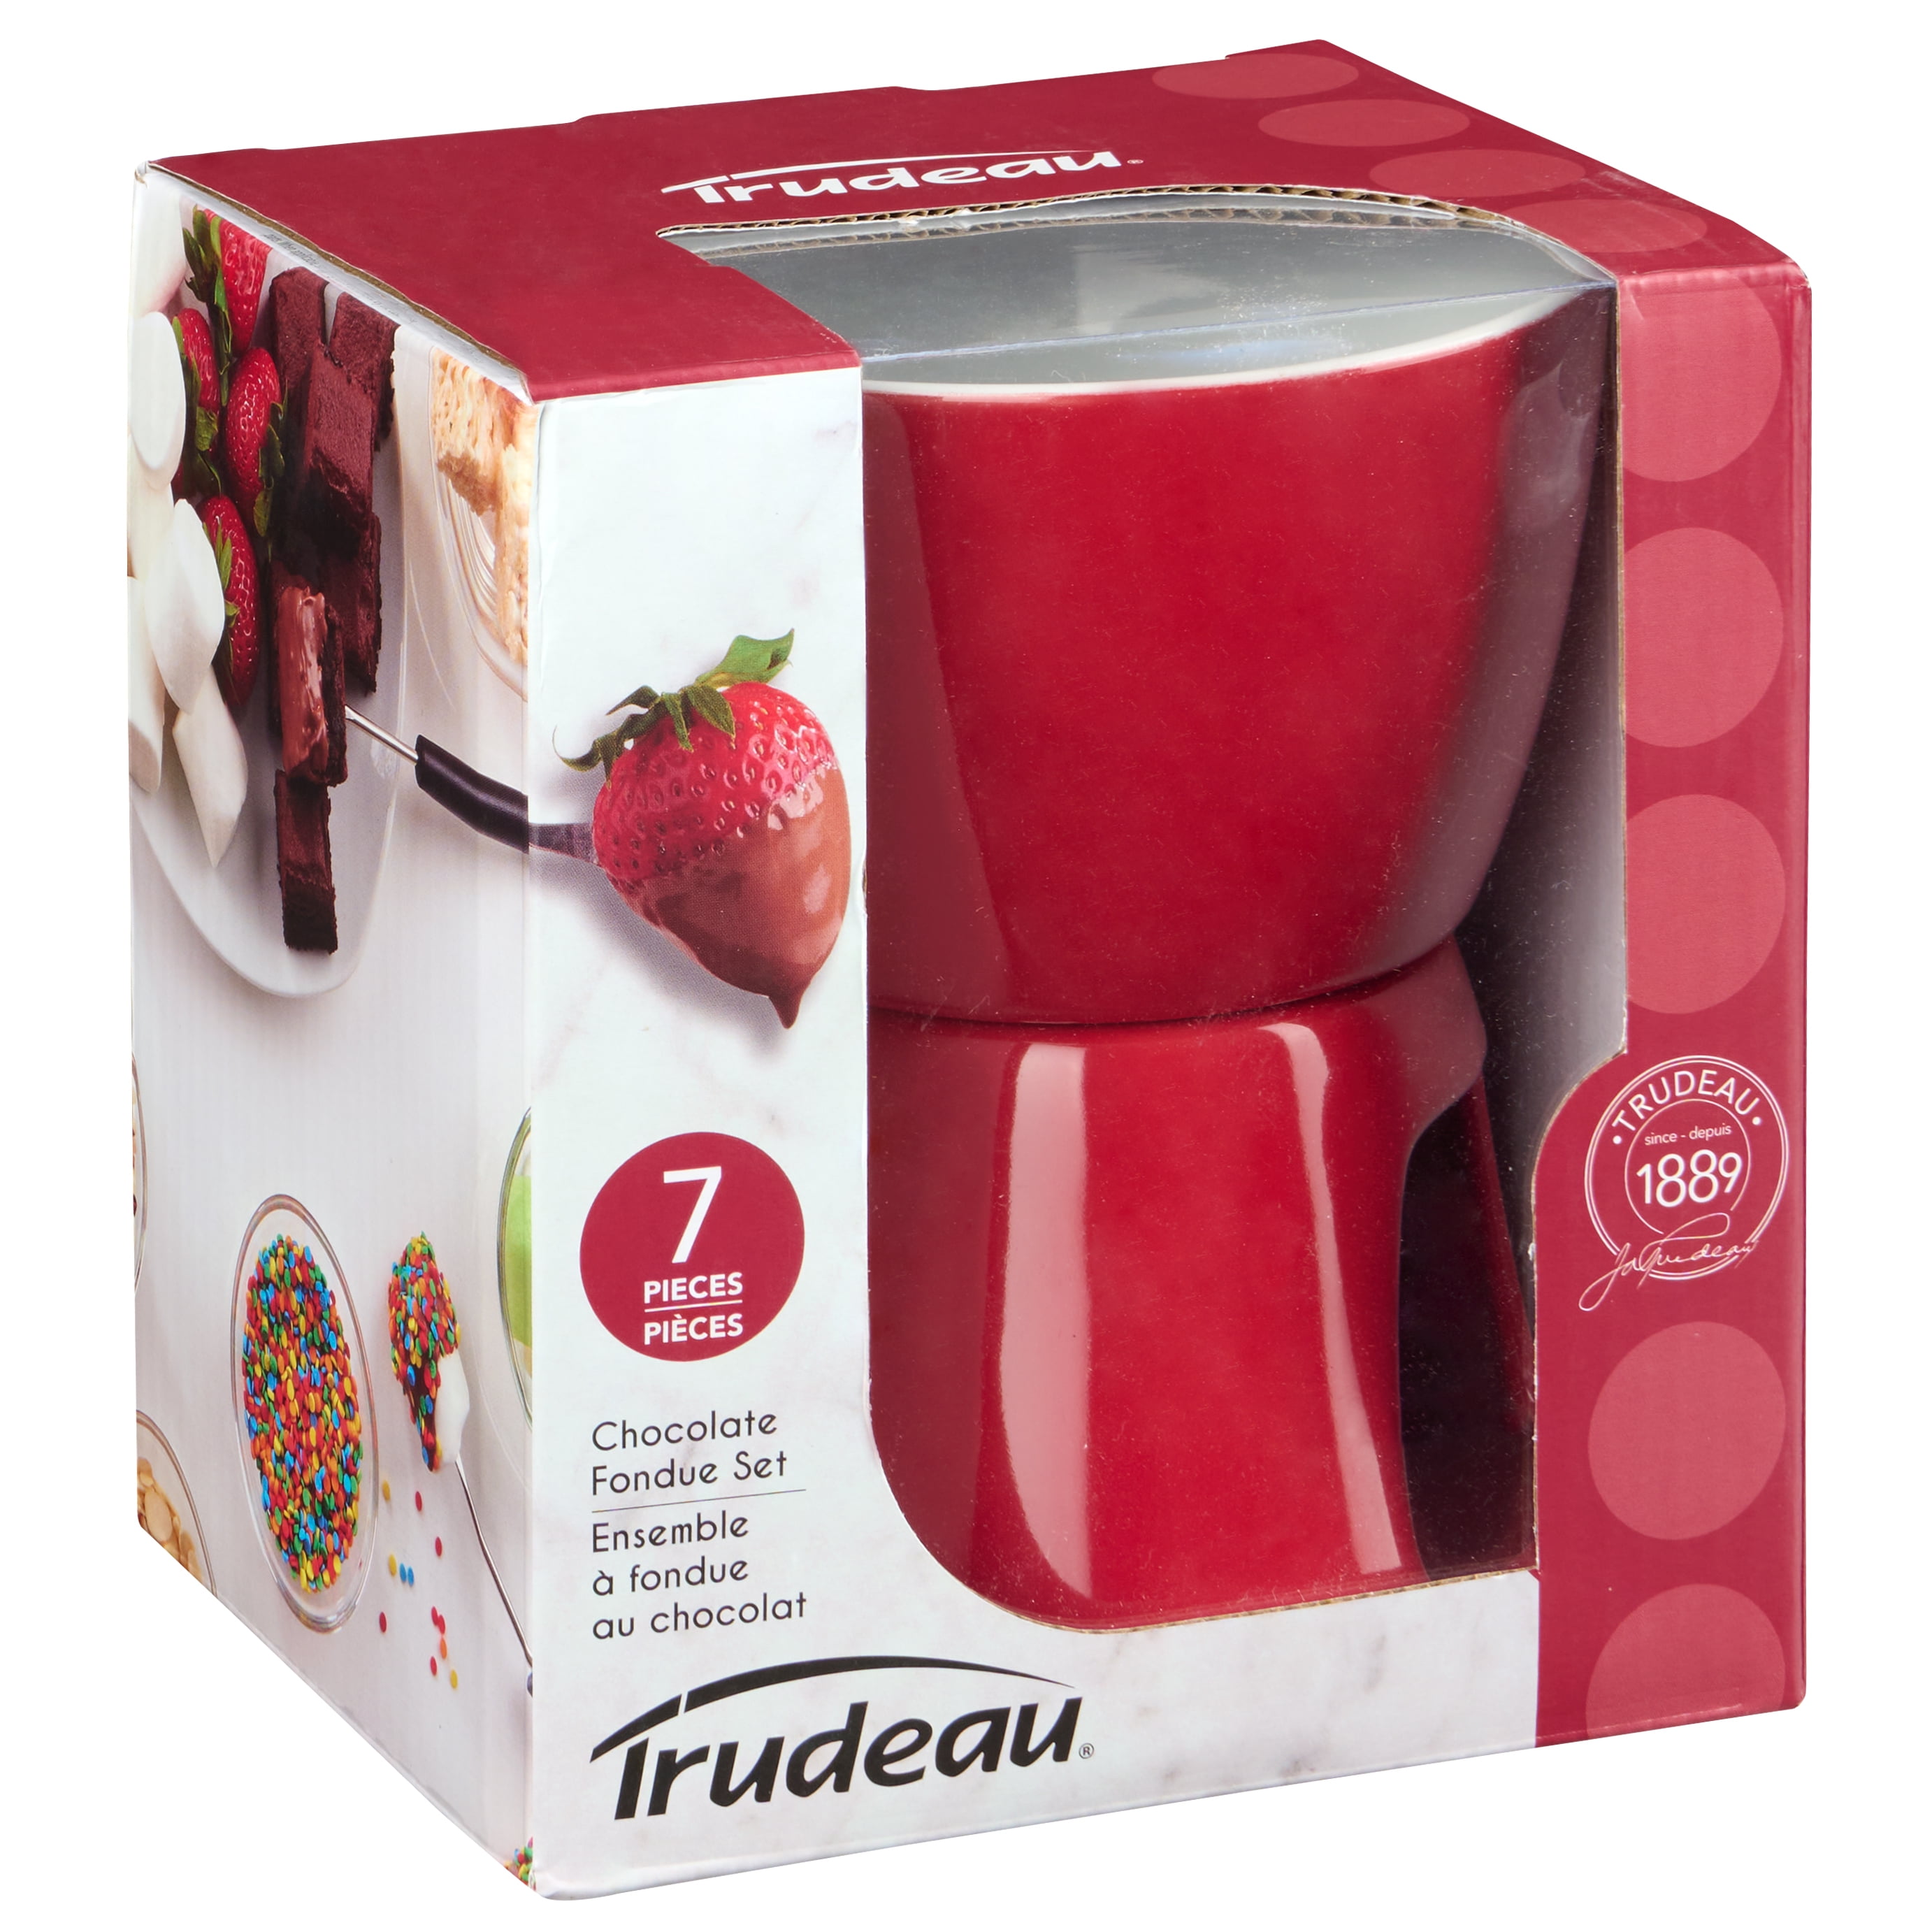 Trudeau 7 Piece Chocolate Fondue Set, Stoneware Bowl Heated with Tea Lights, Red